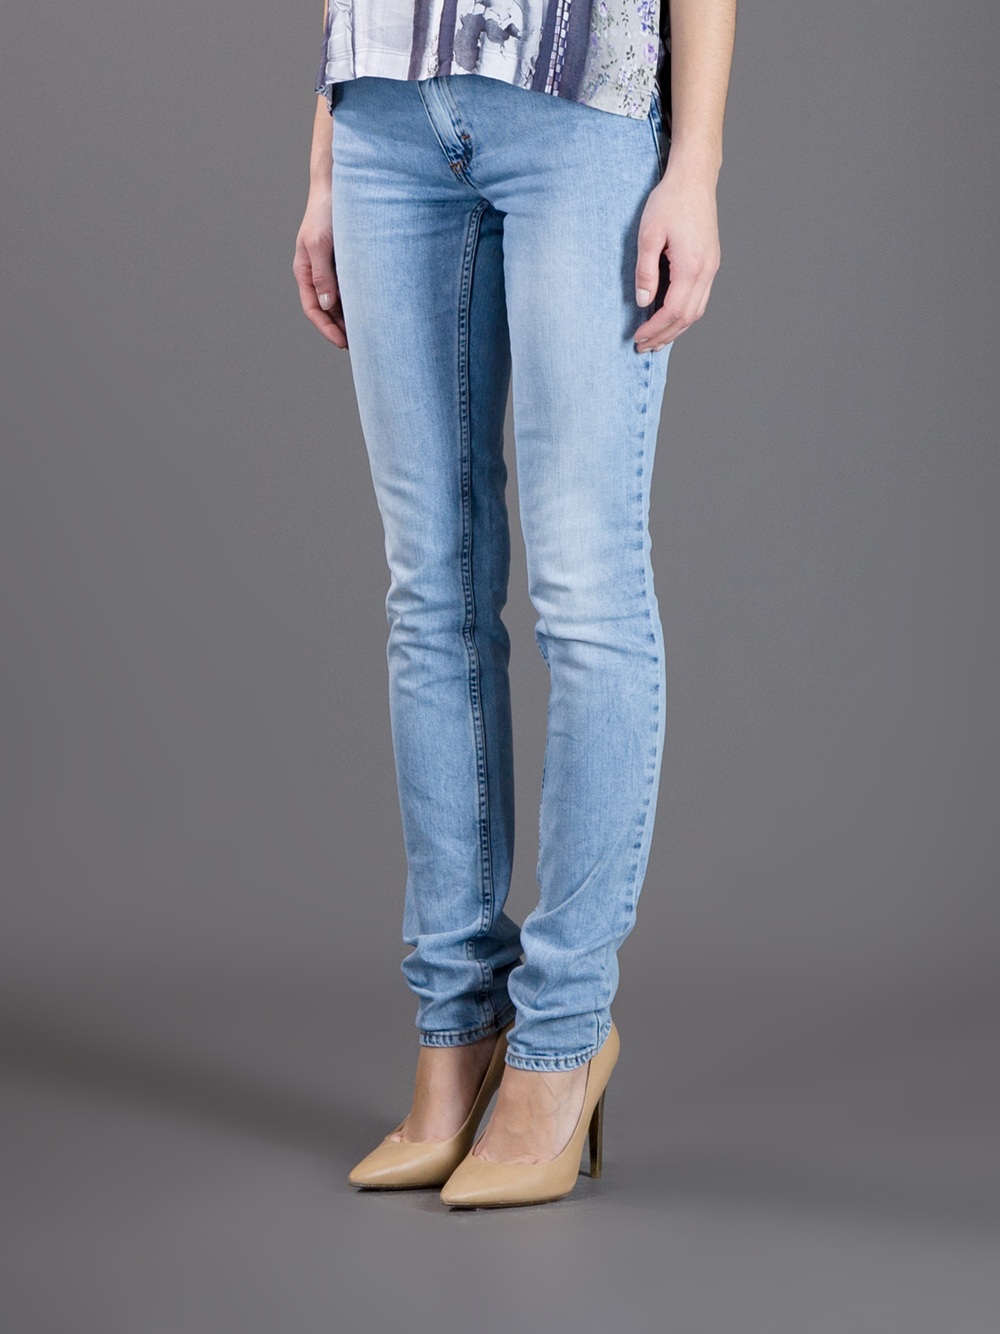 Acne Studios Flex Silver Vintage Jean in Blue - Lyst